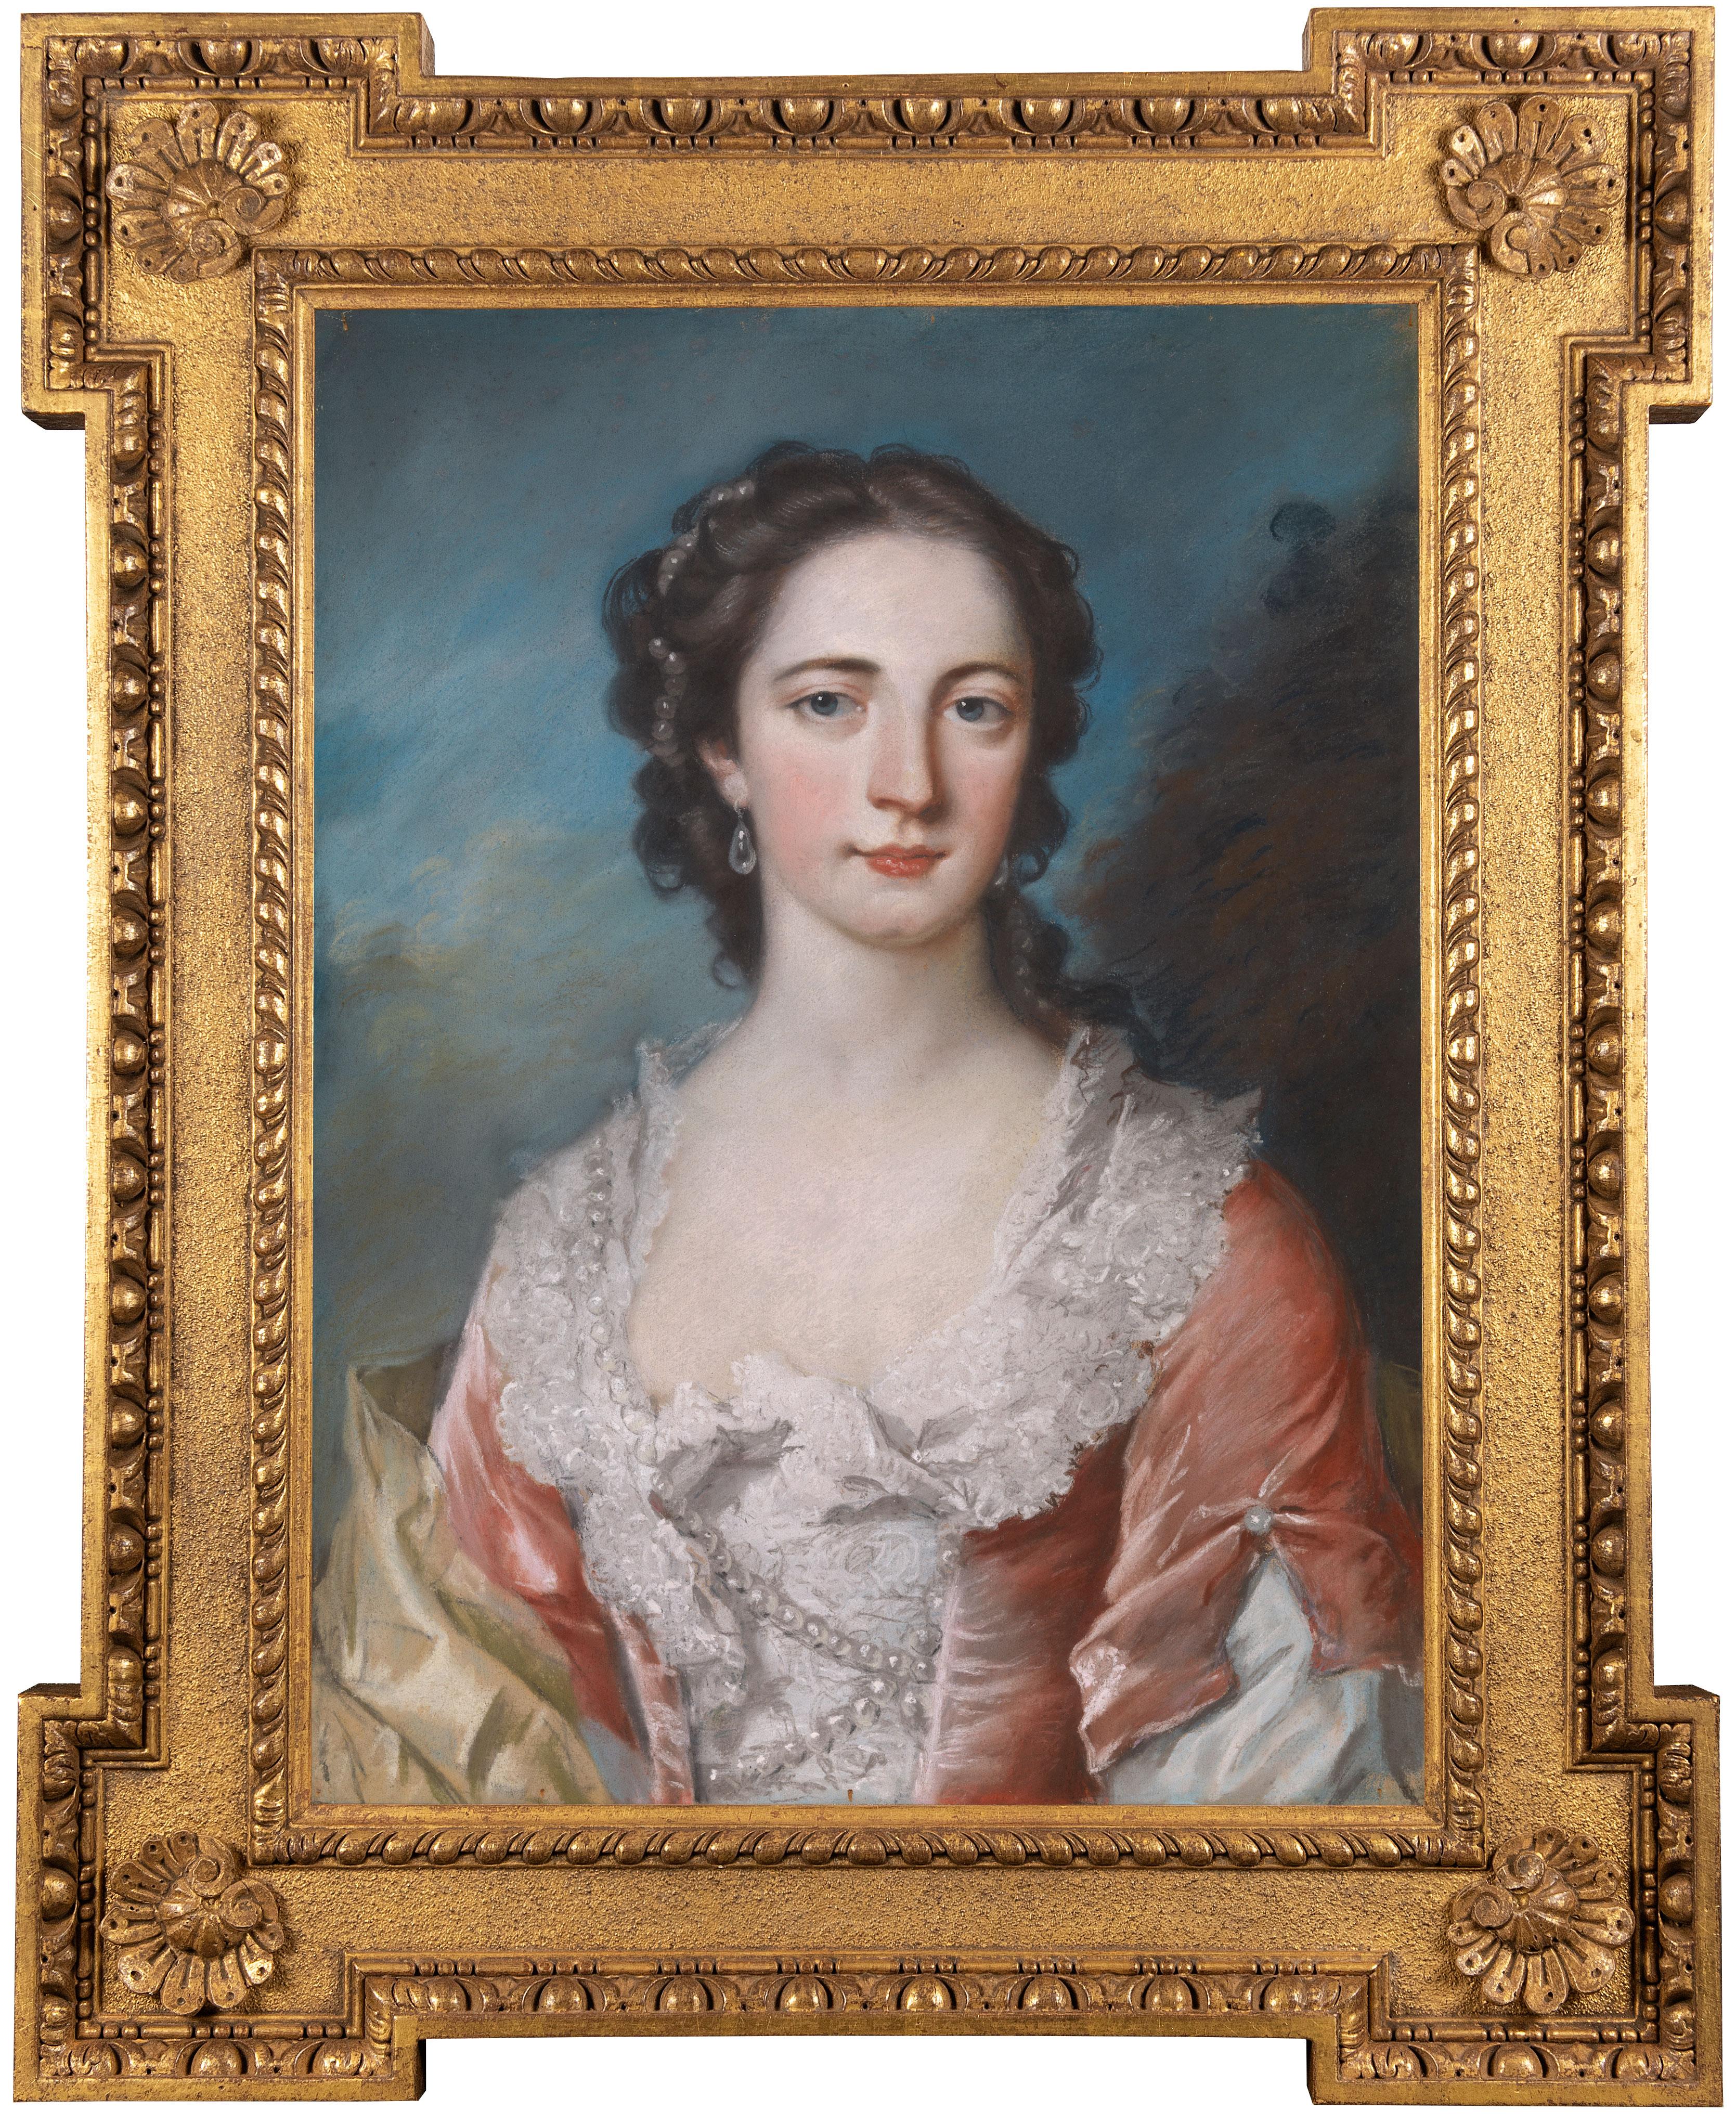 William Hoare of Bath Portrait - 18th century pastel portrait of Lady Norris